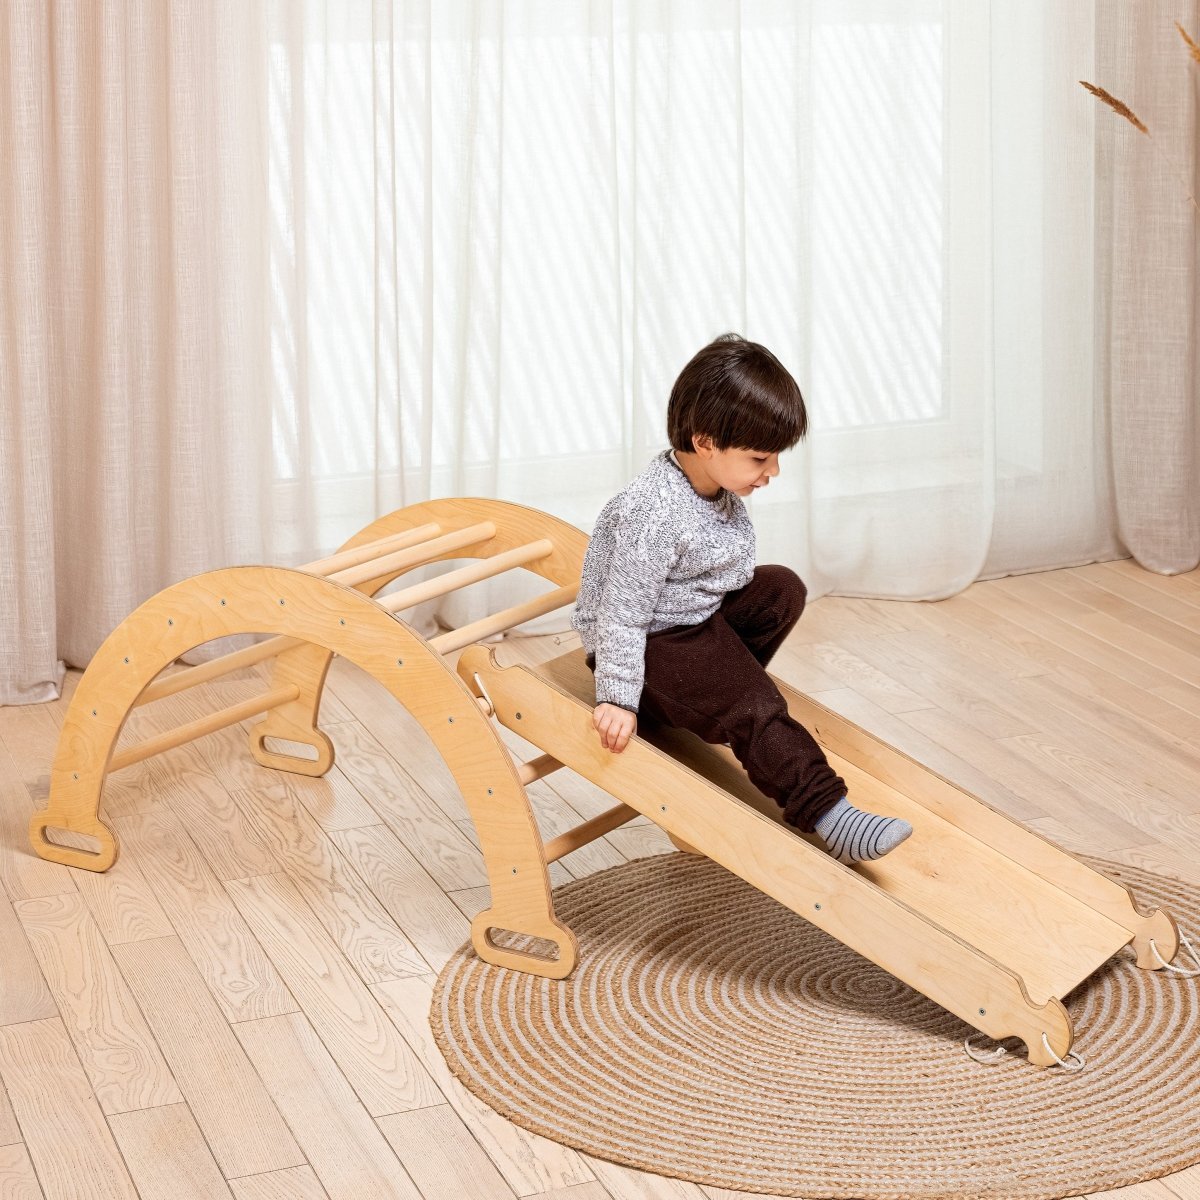 2in1 Montessori Climbing Frame Set: Arch/Rocker Balance + Slide Board/Ramp - Beige